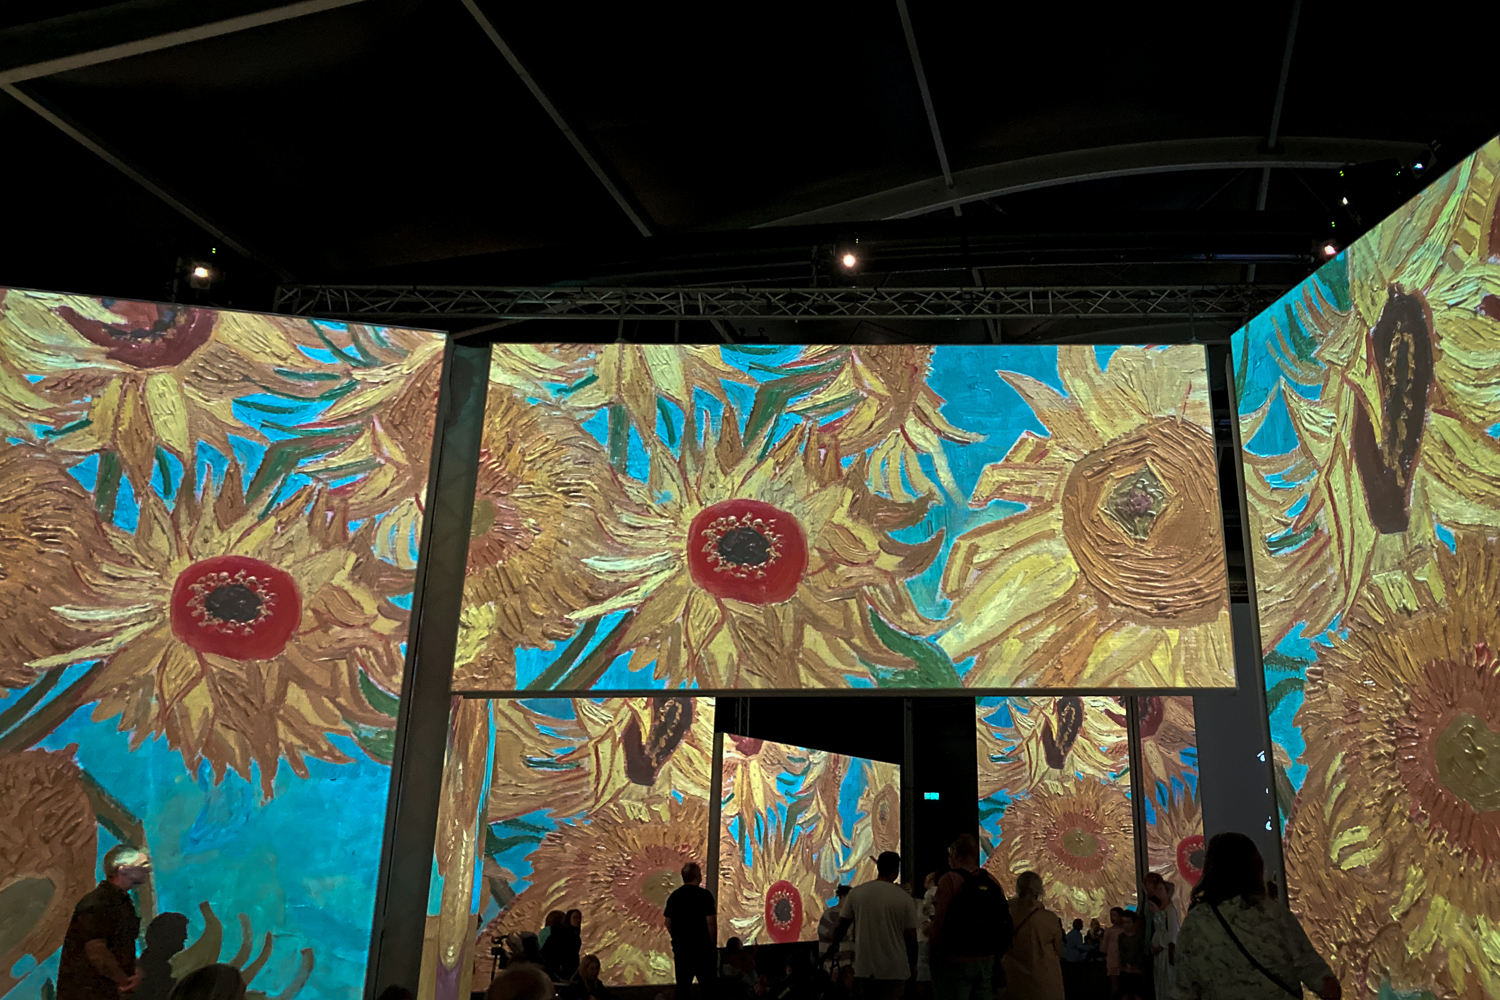 A screen depicting Van Gogh's sunflowers